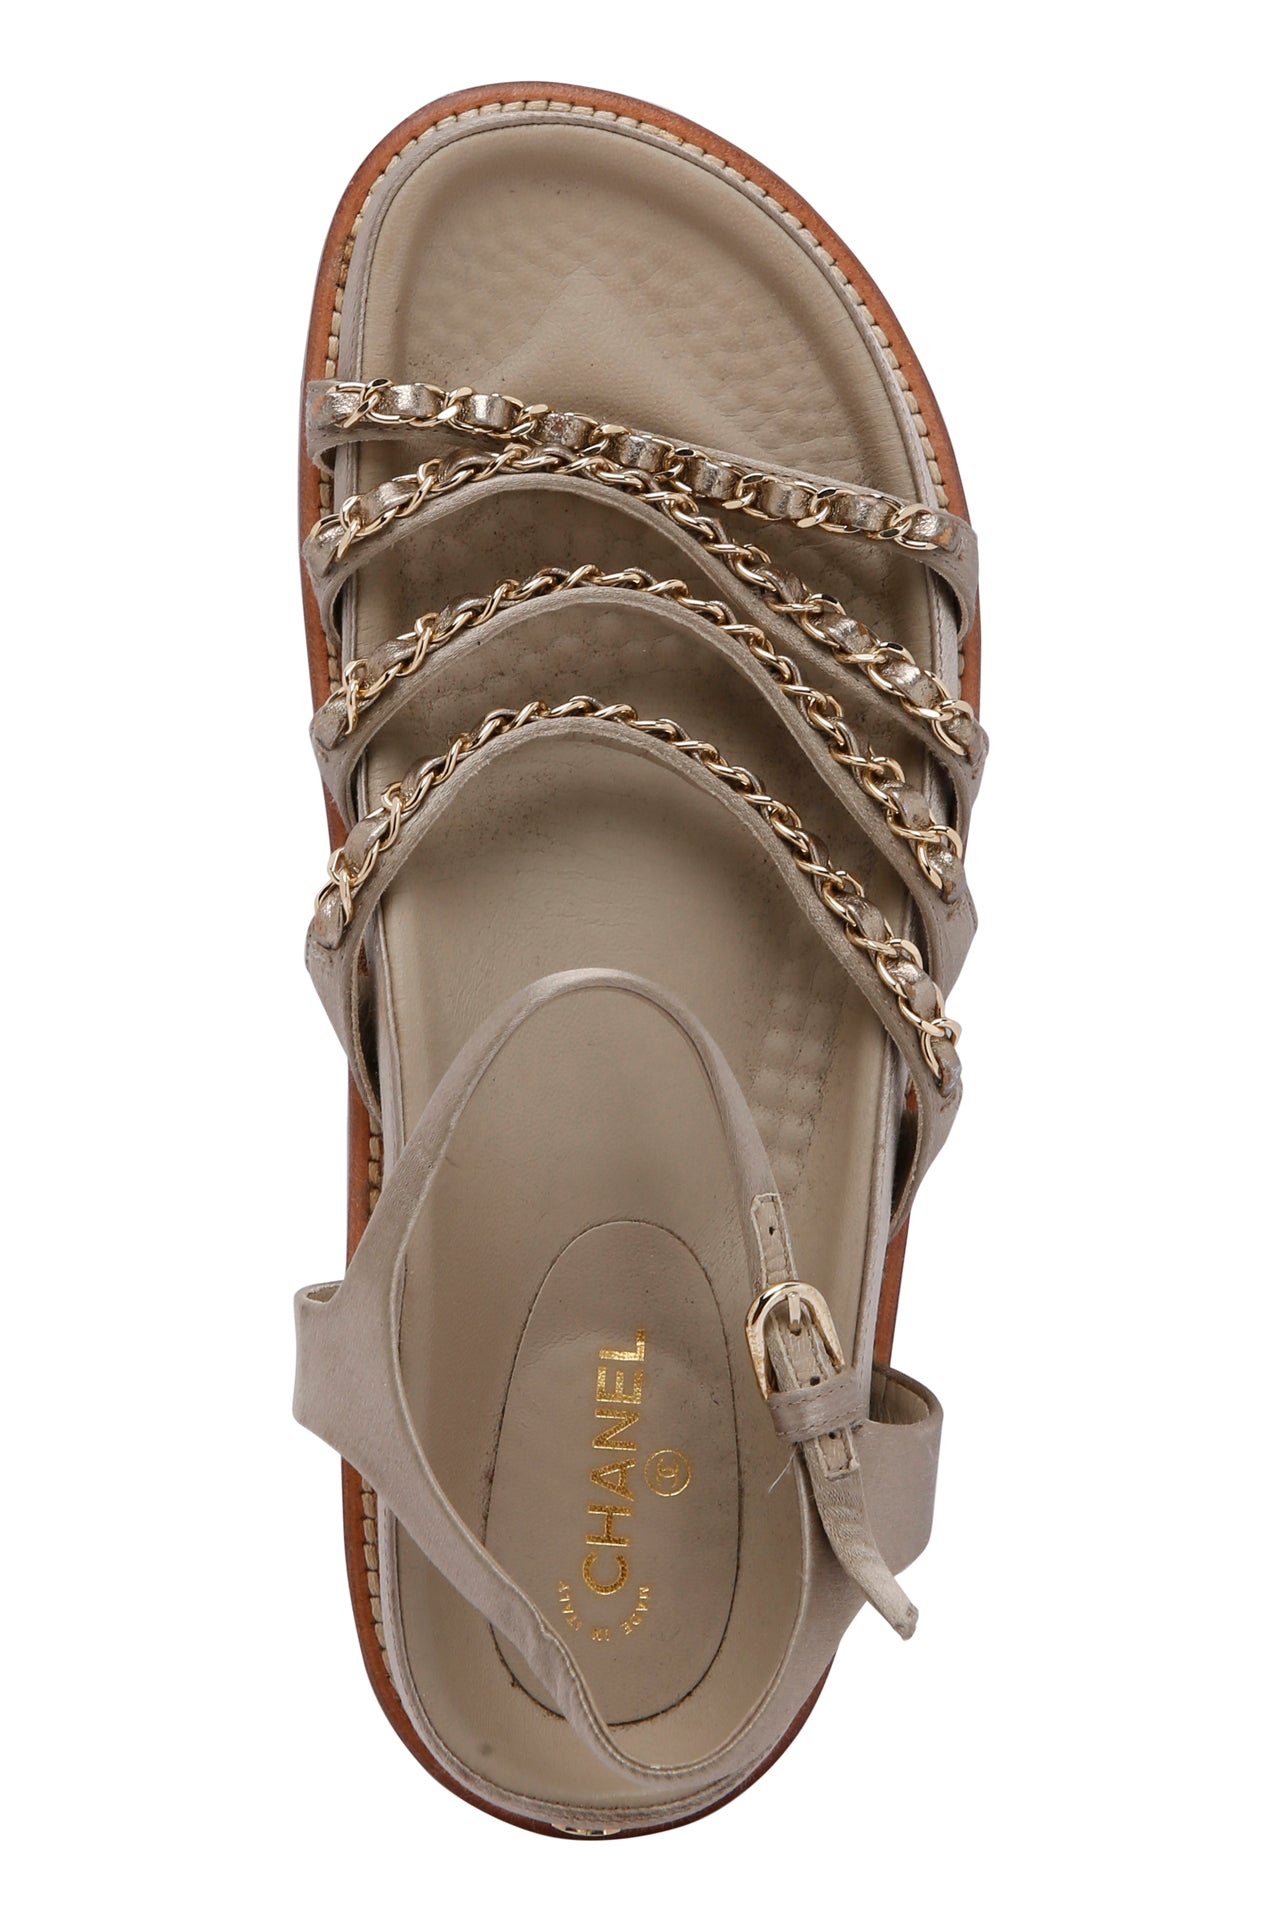 Chanel Beige Satin Chain Detail Ankle Strap Flat Sandals Size EU 38.5